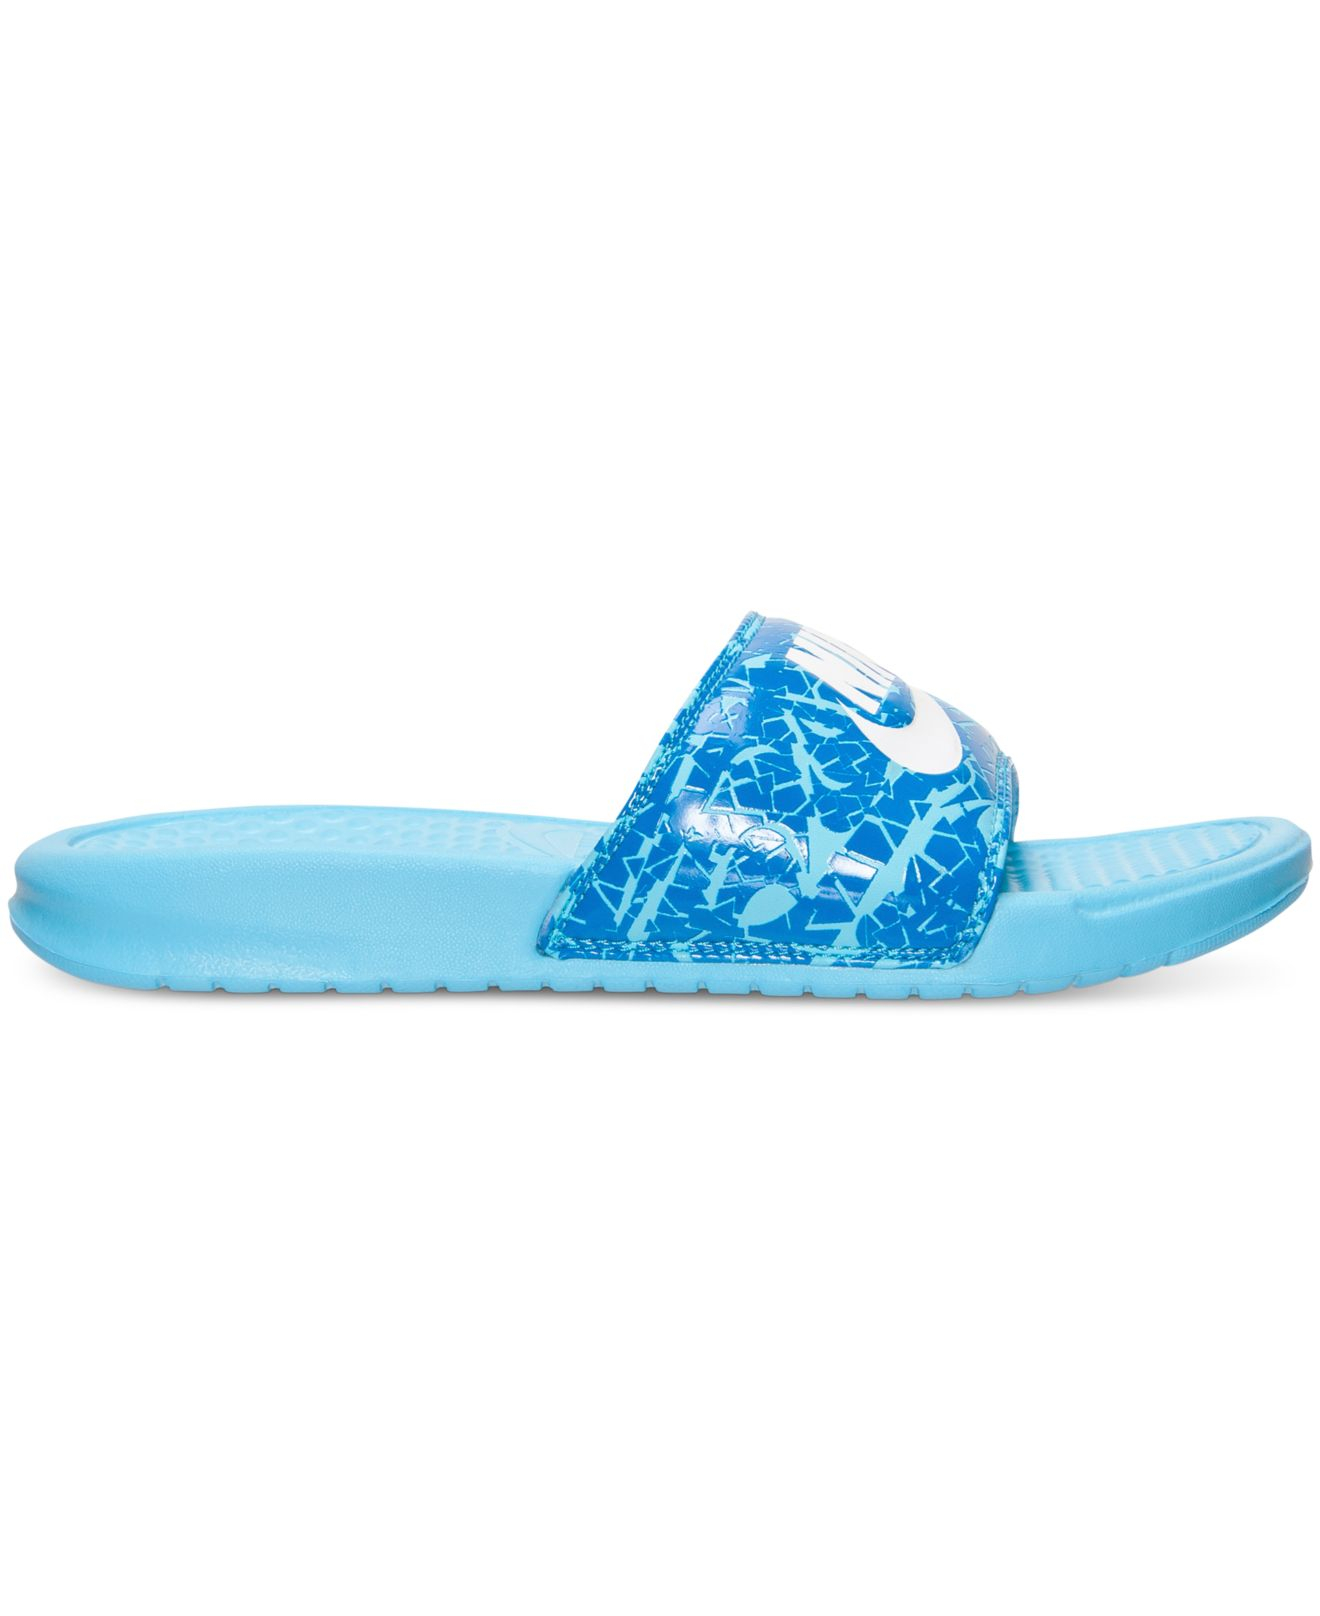 Nike Women's Benassi Jdi Print Slide Sandals From Finish Line in Blue ...